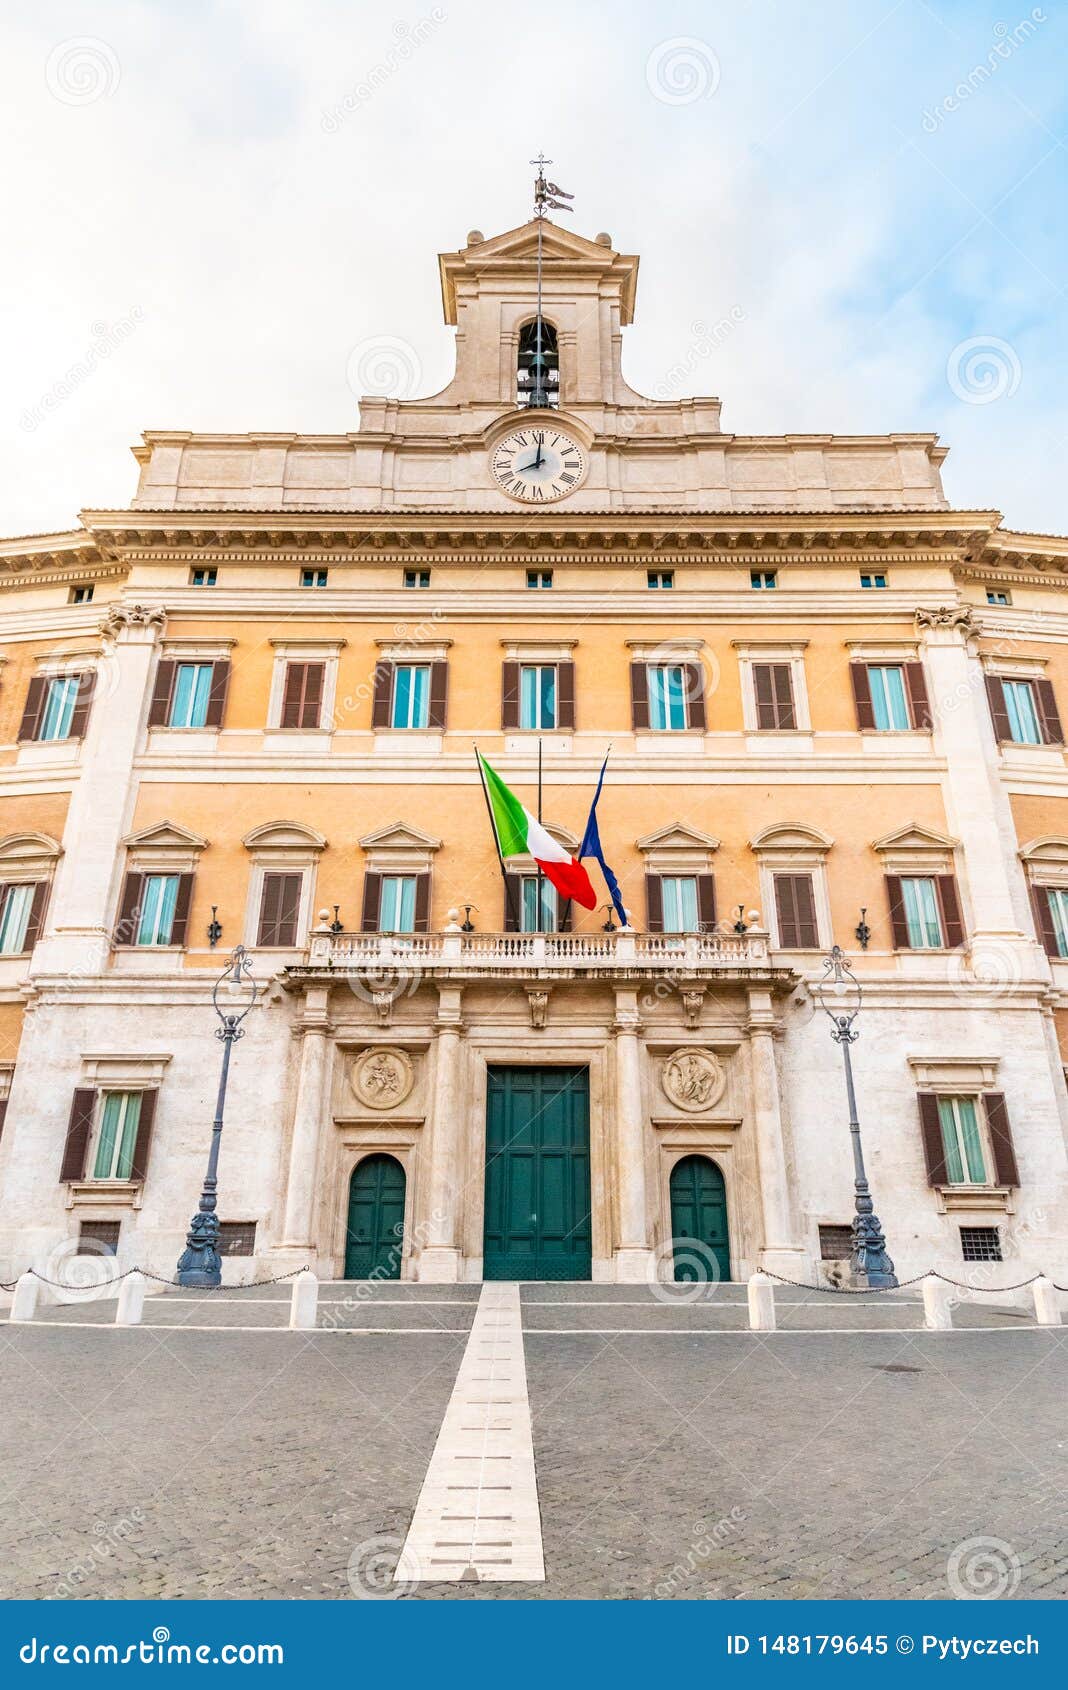 Montecitorio Palace, seat of Italian Chamber of Deputies. Italian Parliament building, Rome, Italy.